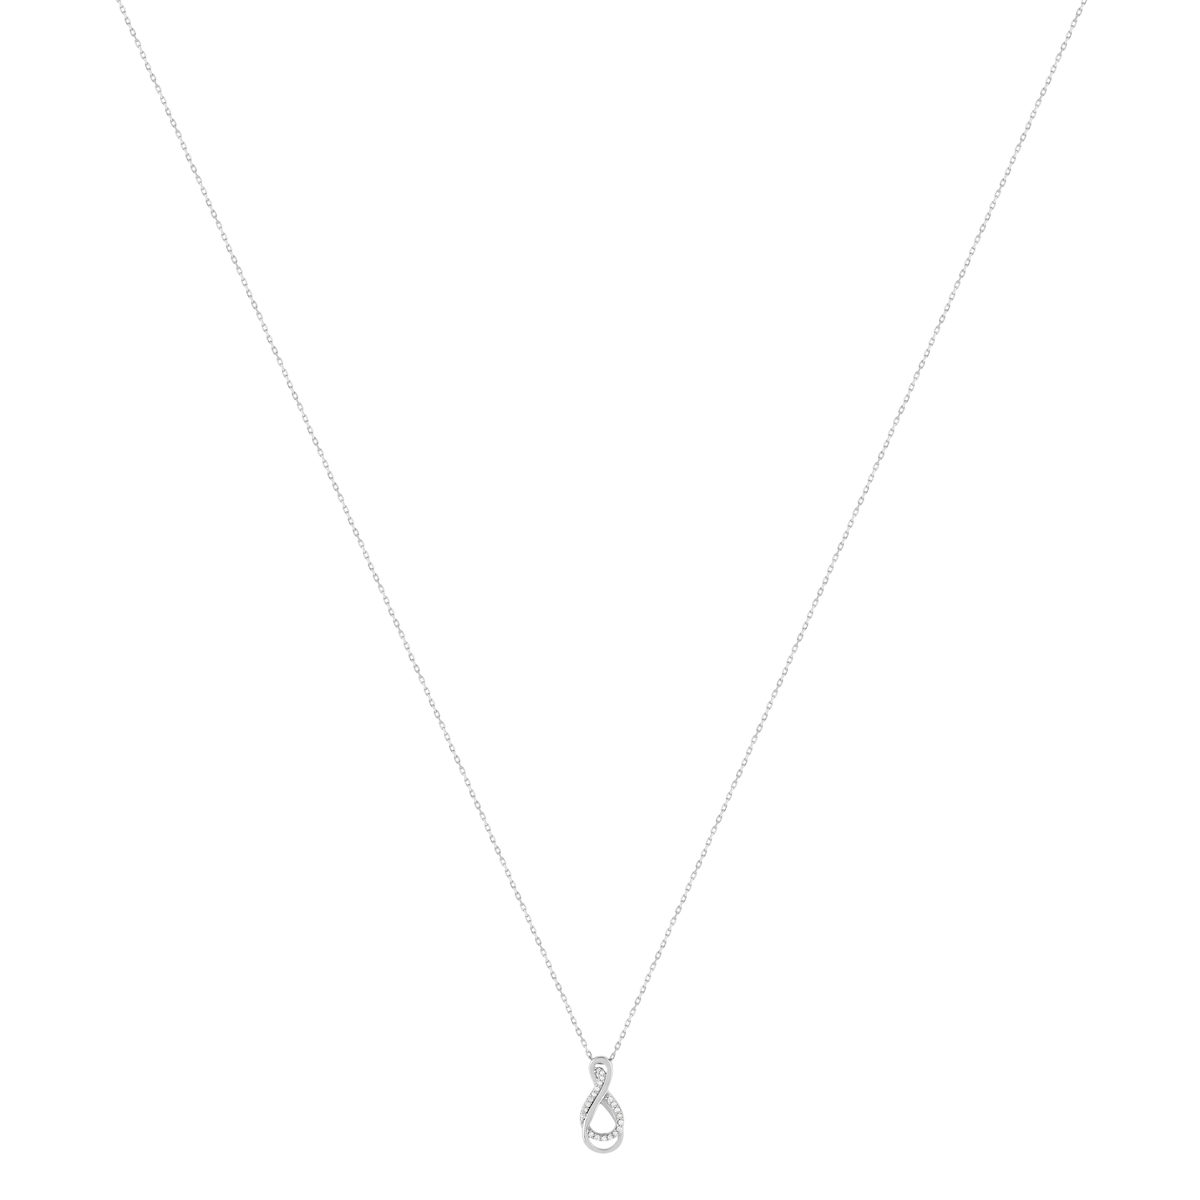 Collier or 375 blanc diamants, 45 cm - vue 2